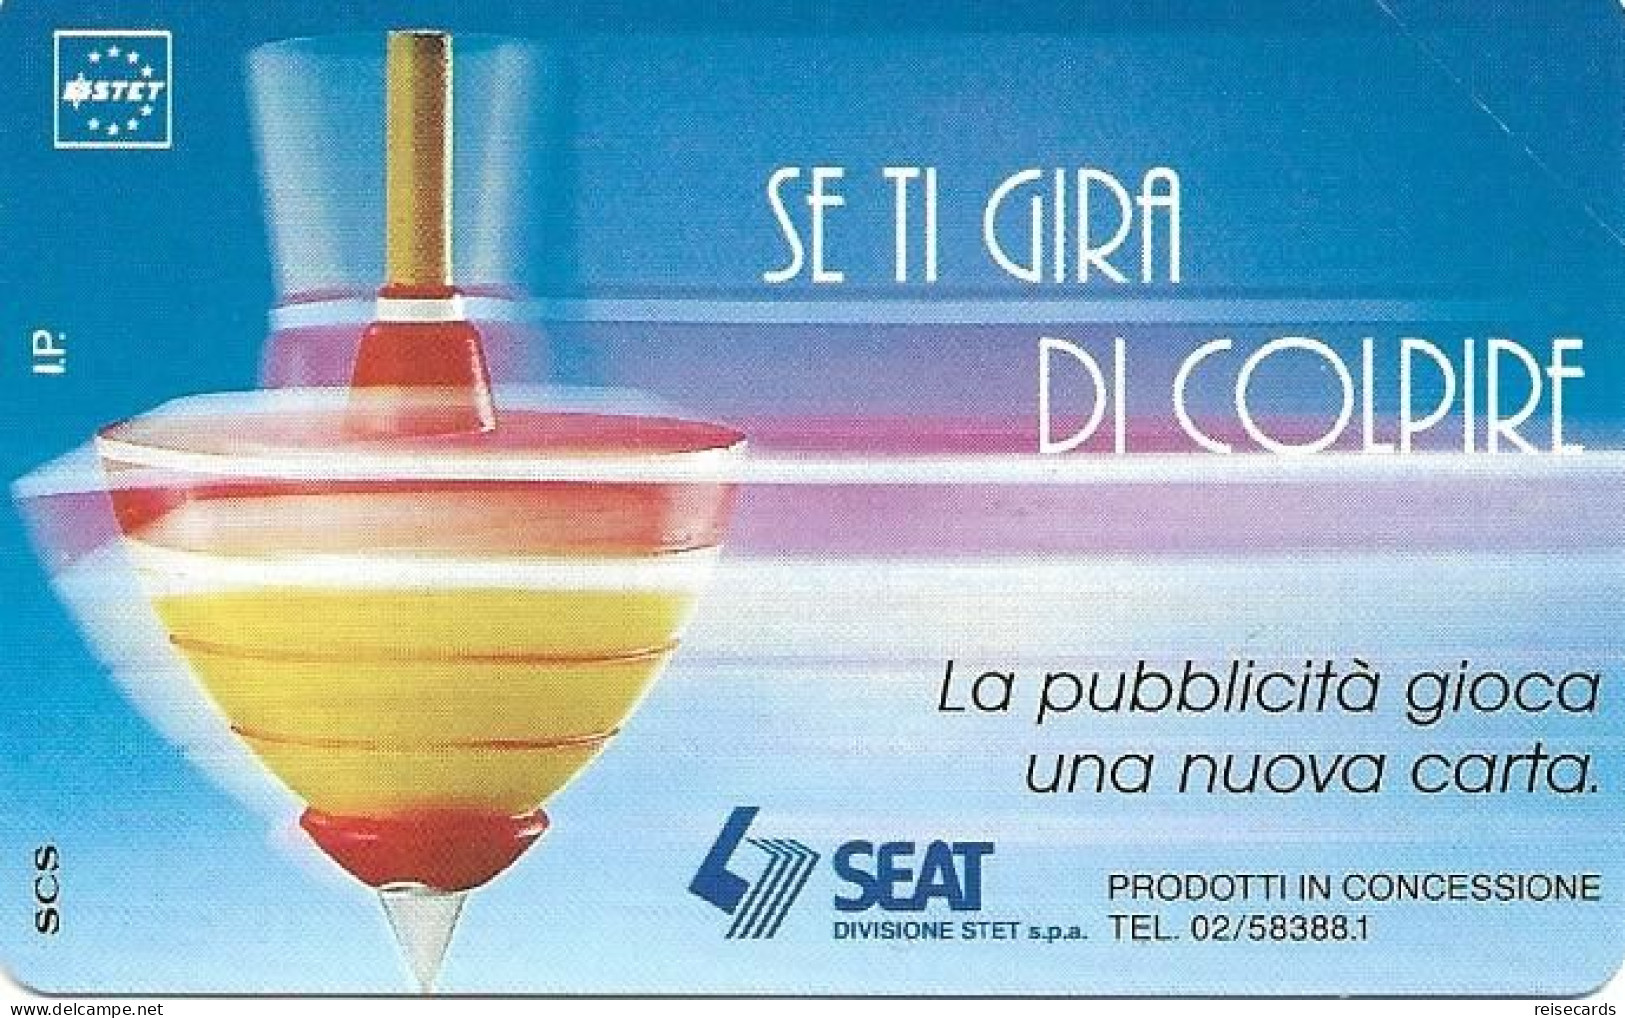 Italy: Telecom Italia SIP - SEAT Se Ti Gira Di Colpire. Mint - Publiques Publicitaires